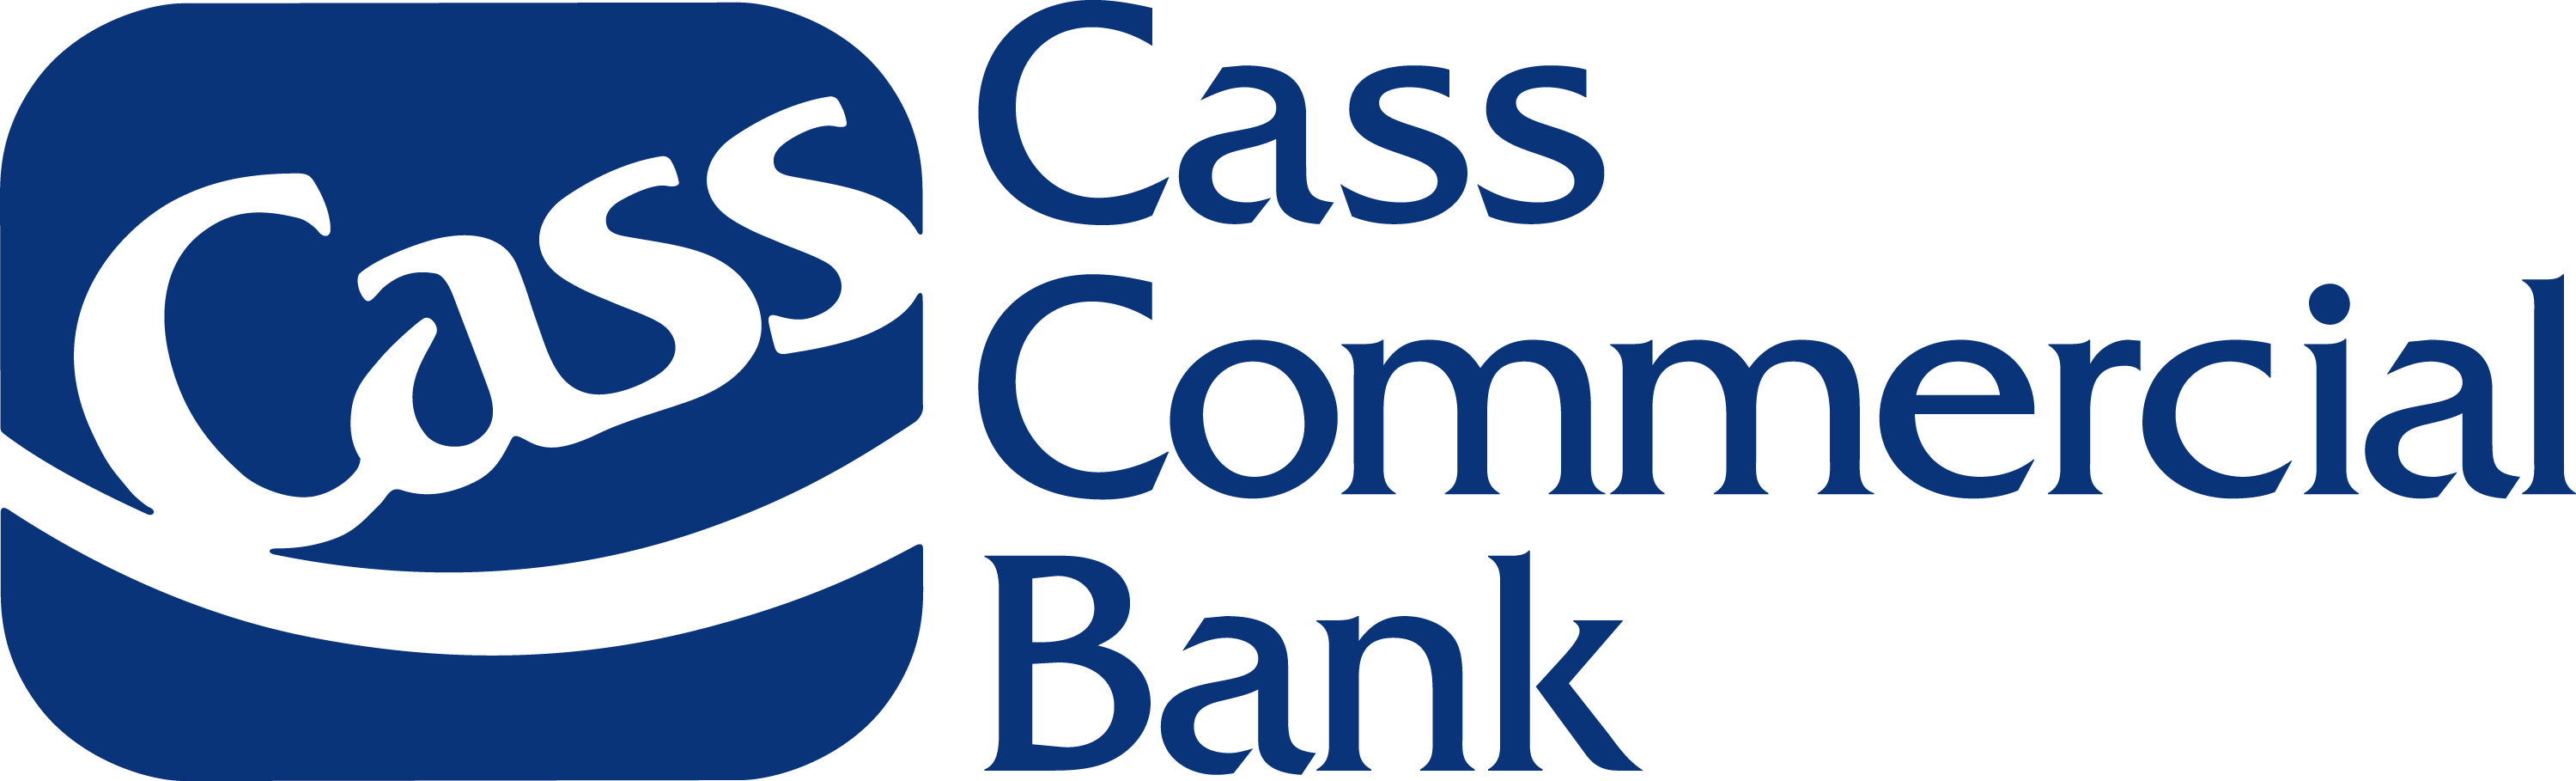 Cass Commercial Bank logo